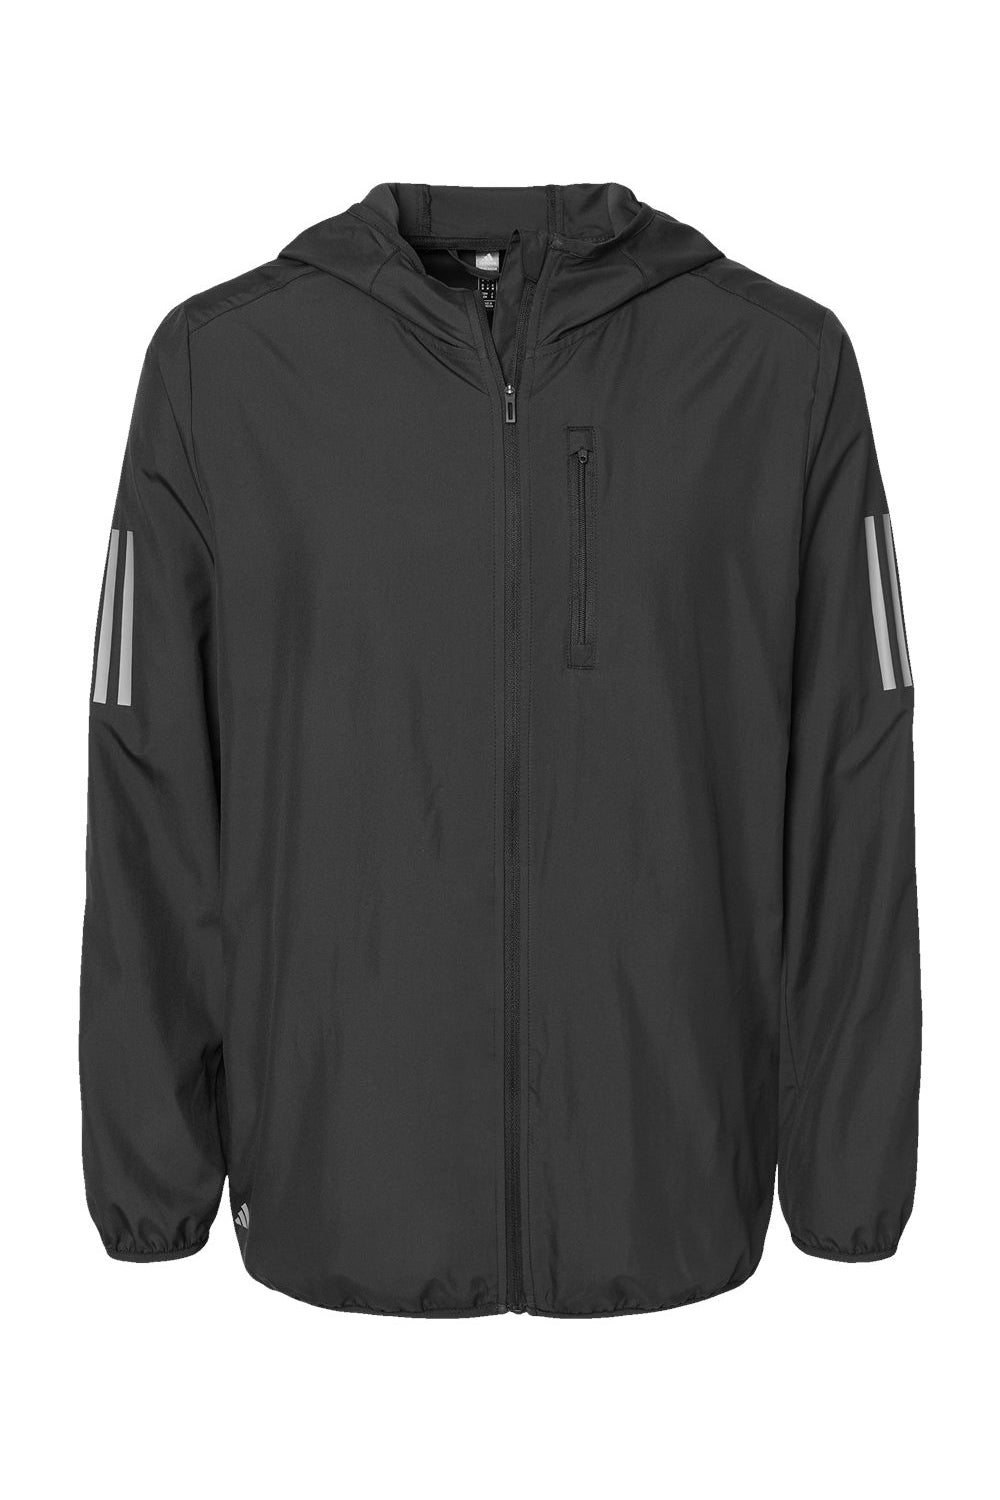 Adidas A524 Mens Full Zip Hooded Windbreaker Jacket Black Flat Front